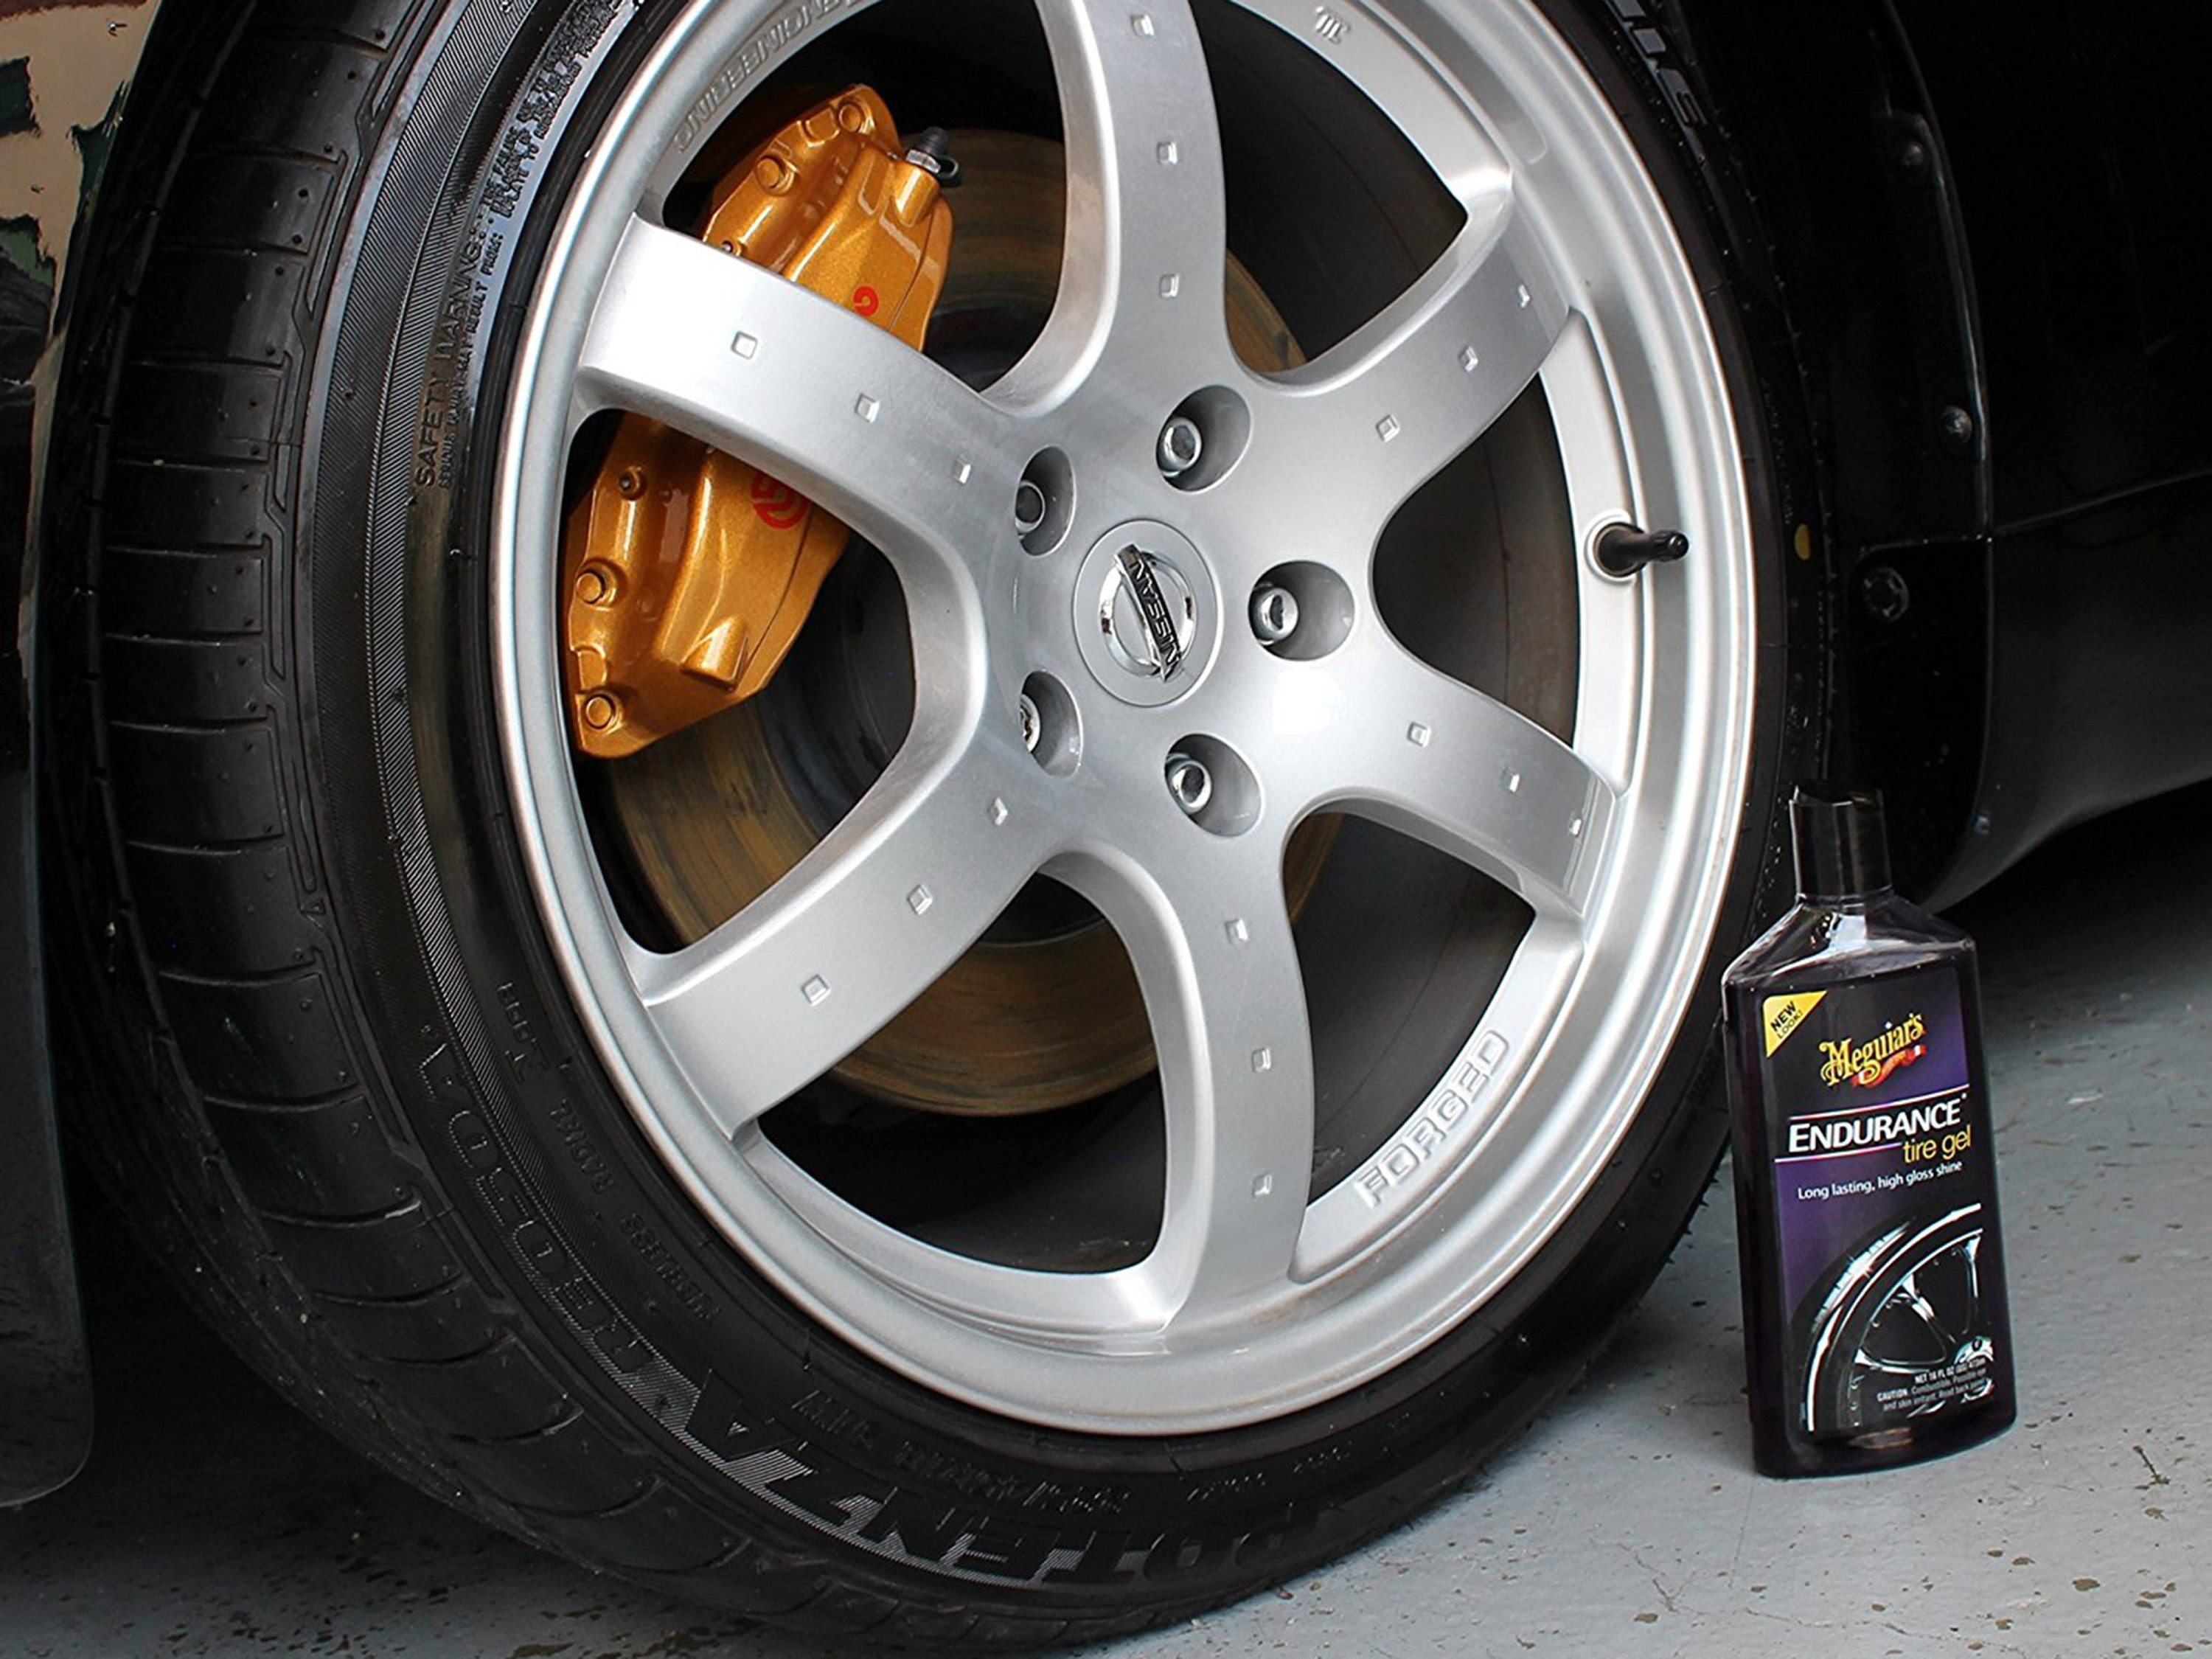 Meguiar's Endurance Tire Gel, Rich Purple Liquid, Glossy Shine - Tire Care, 16 Oz - image 4 of 9